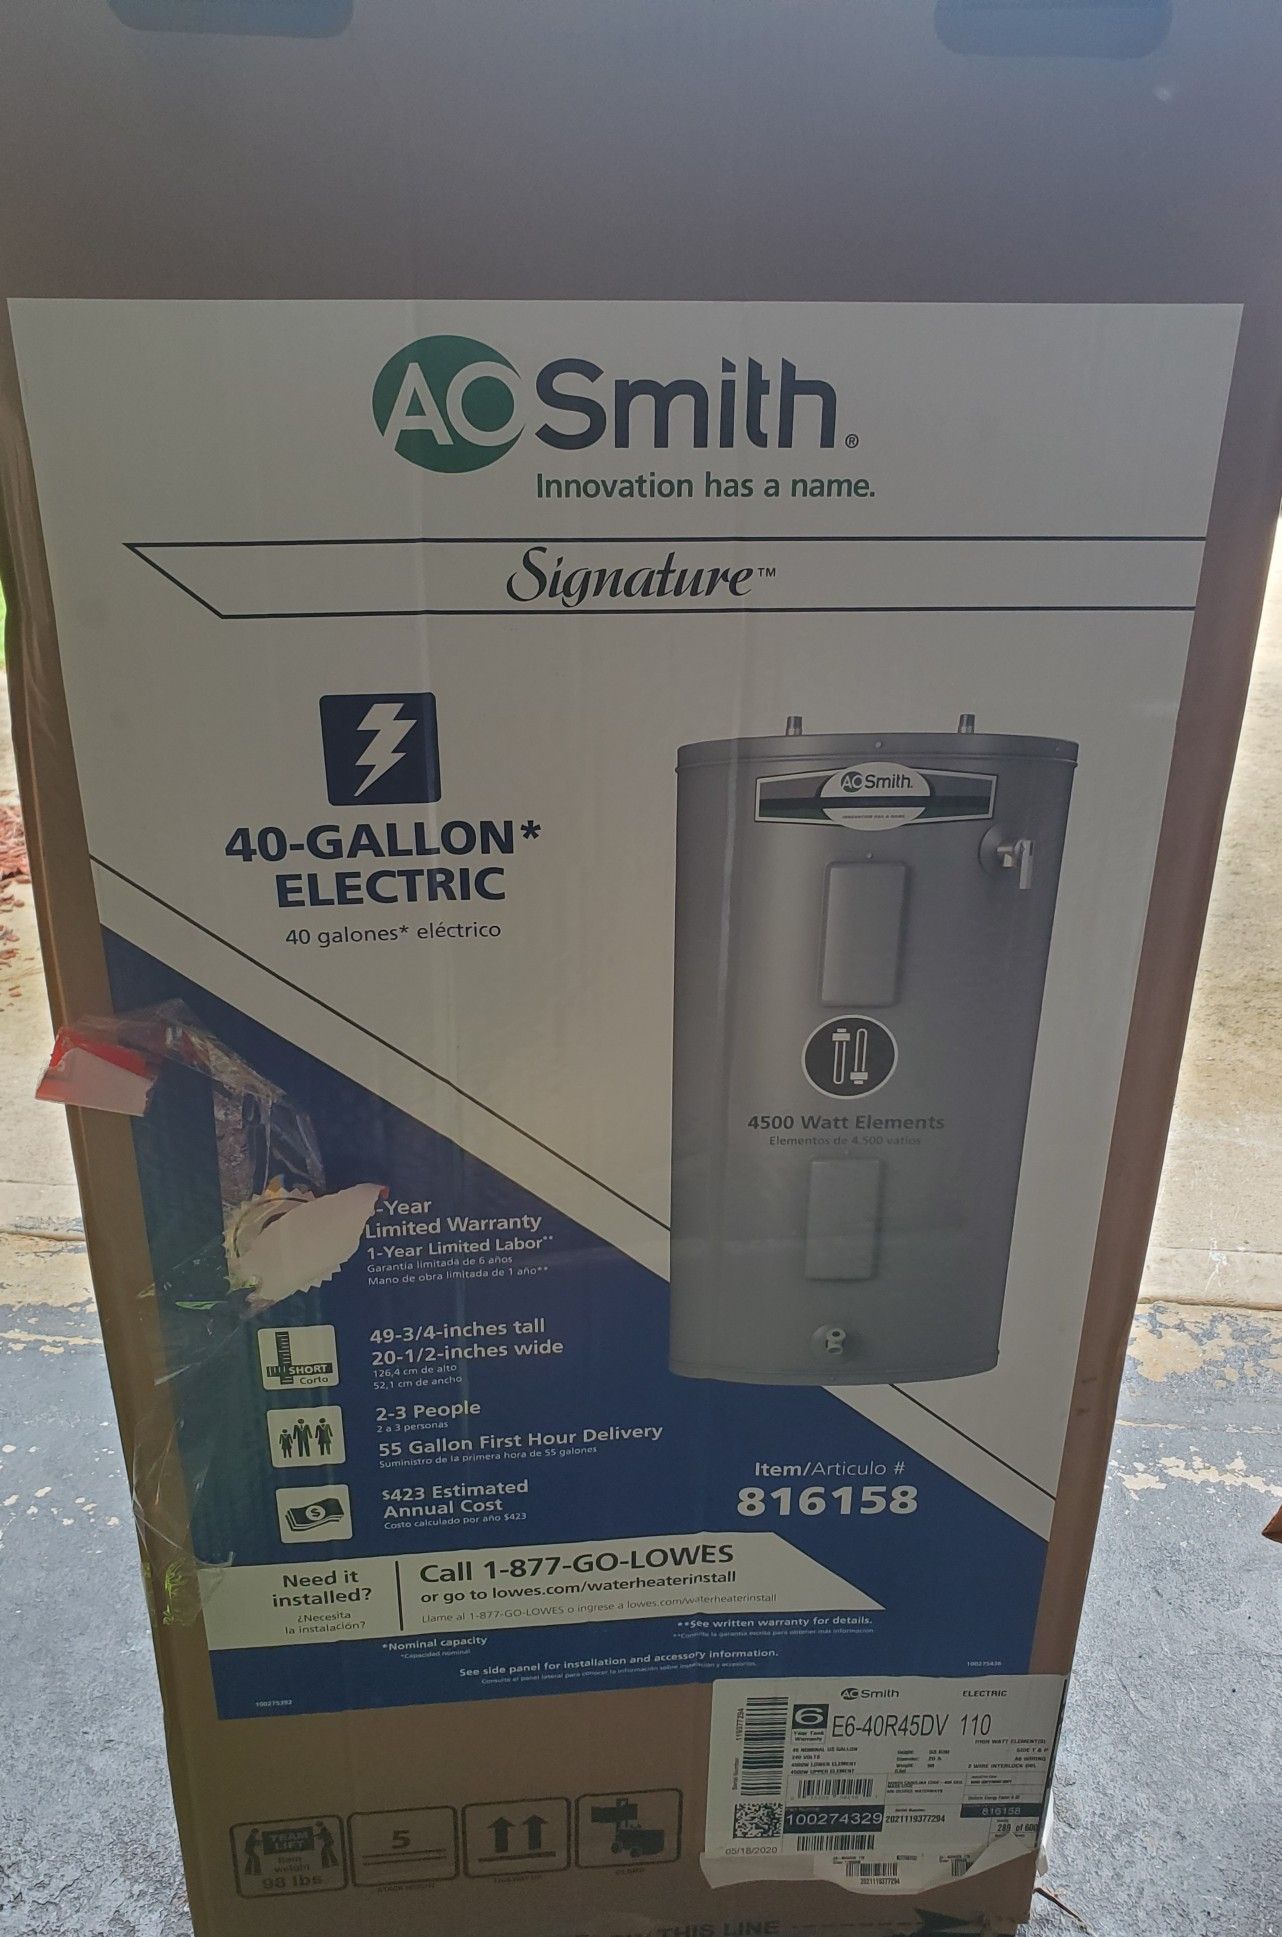 A.O. Smith Signature 40-Gallon Electric water heater